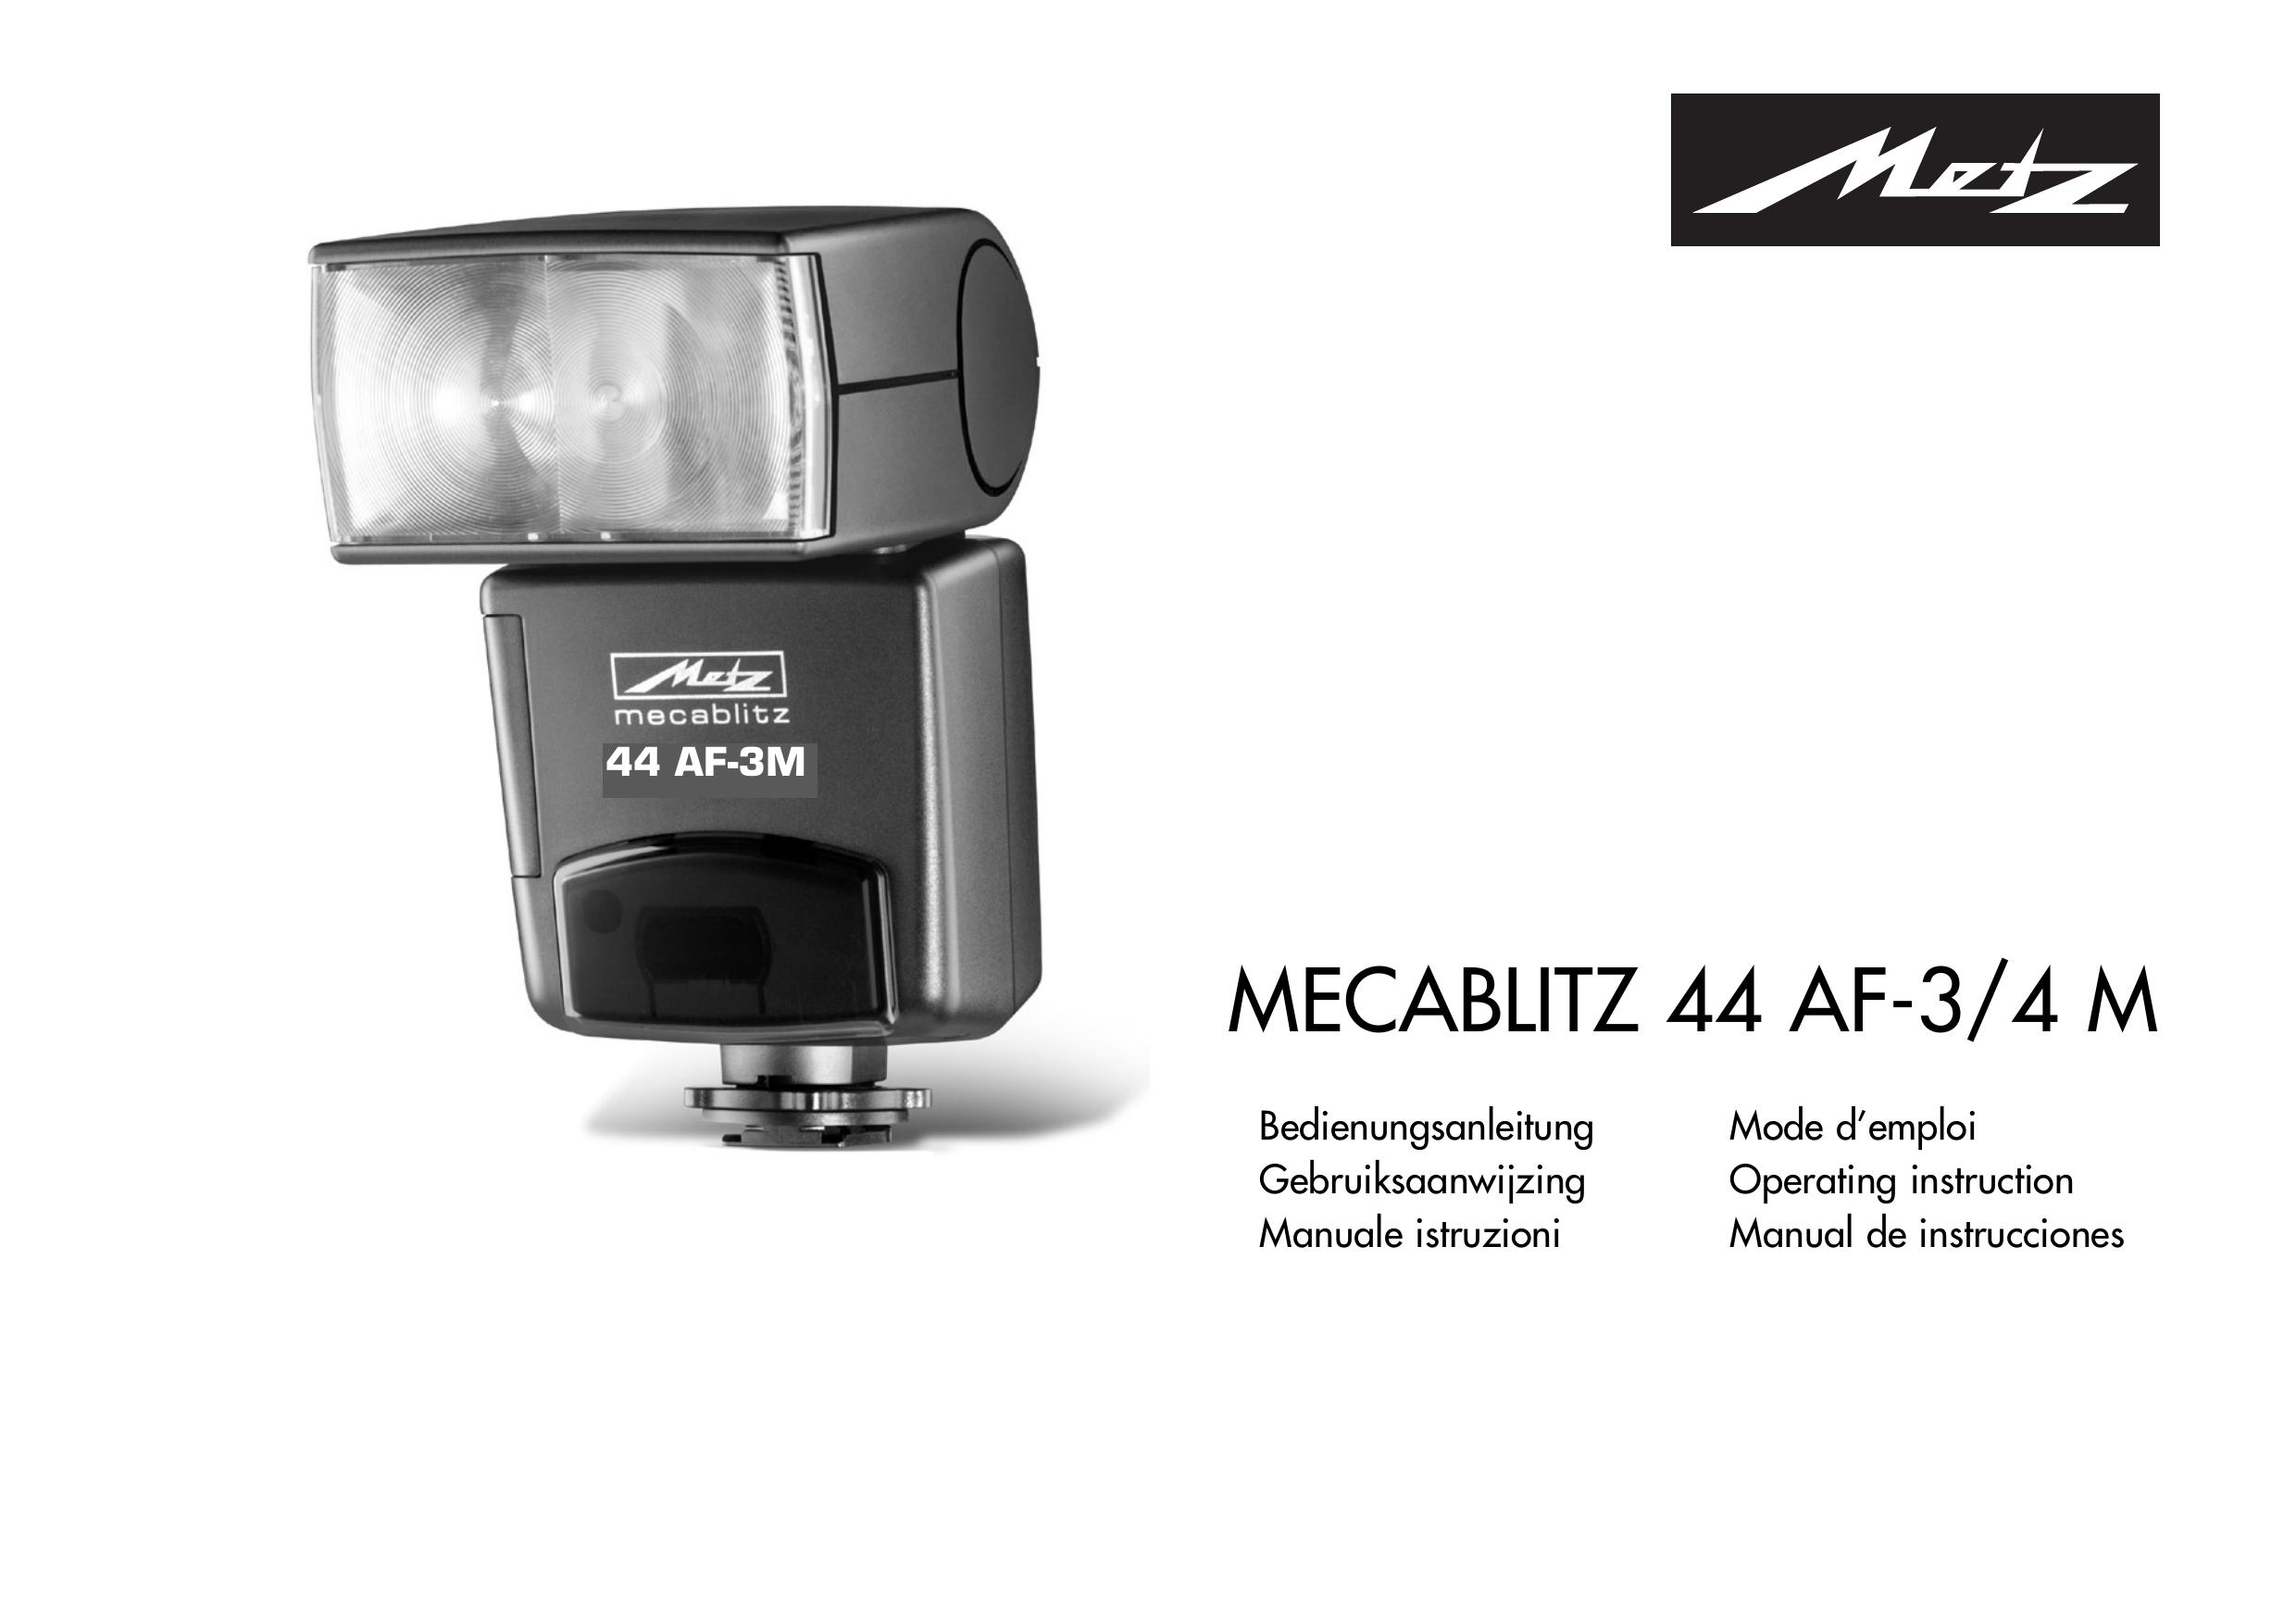 Metz 44 AF-3M Digital Camera User Manual